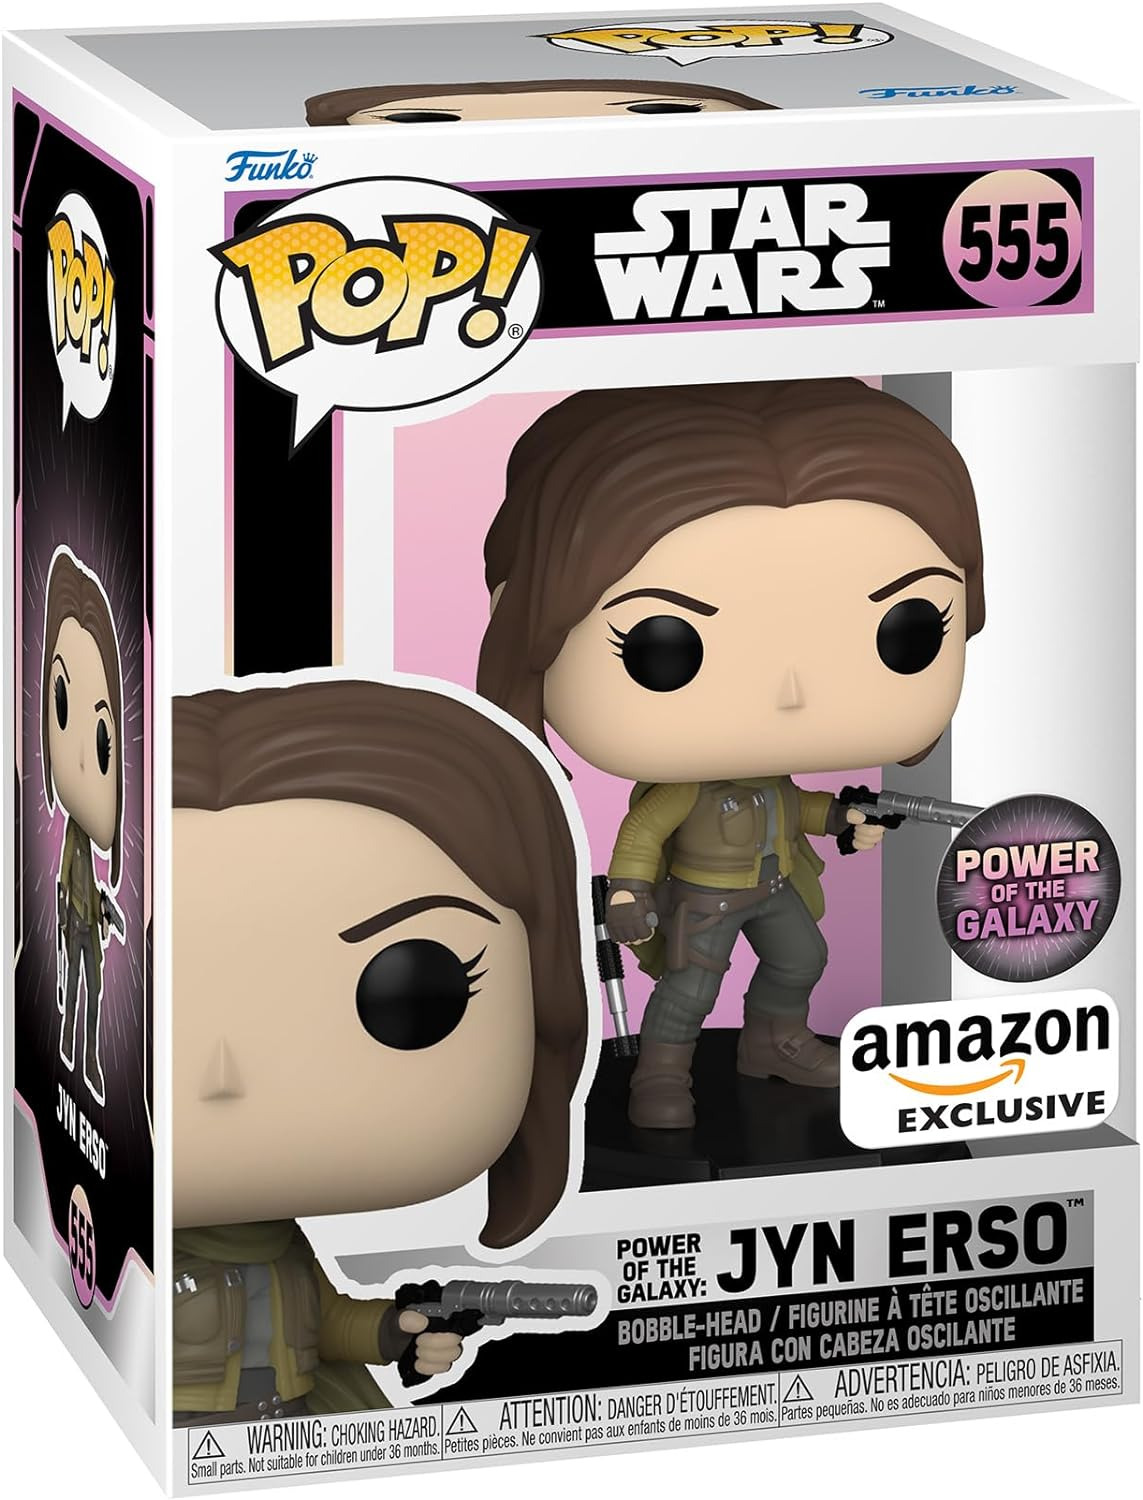 Funko Pop: Star Wars: Power of the Galaxy - Jyn Erso, Amazon Exclusive